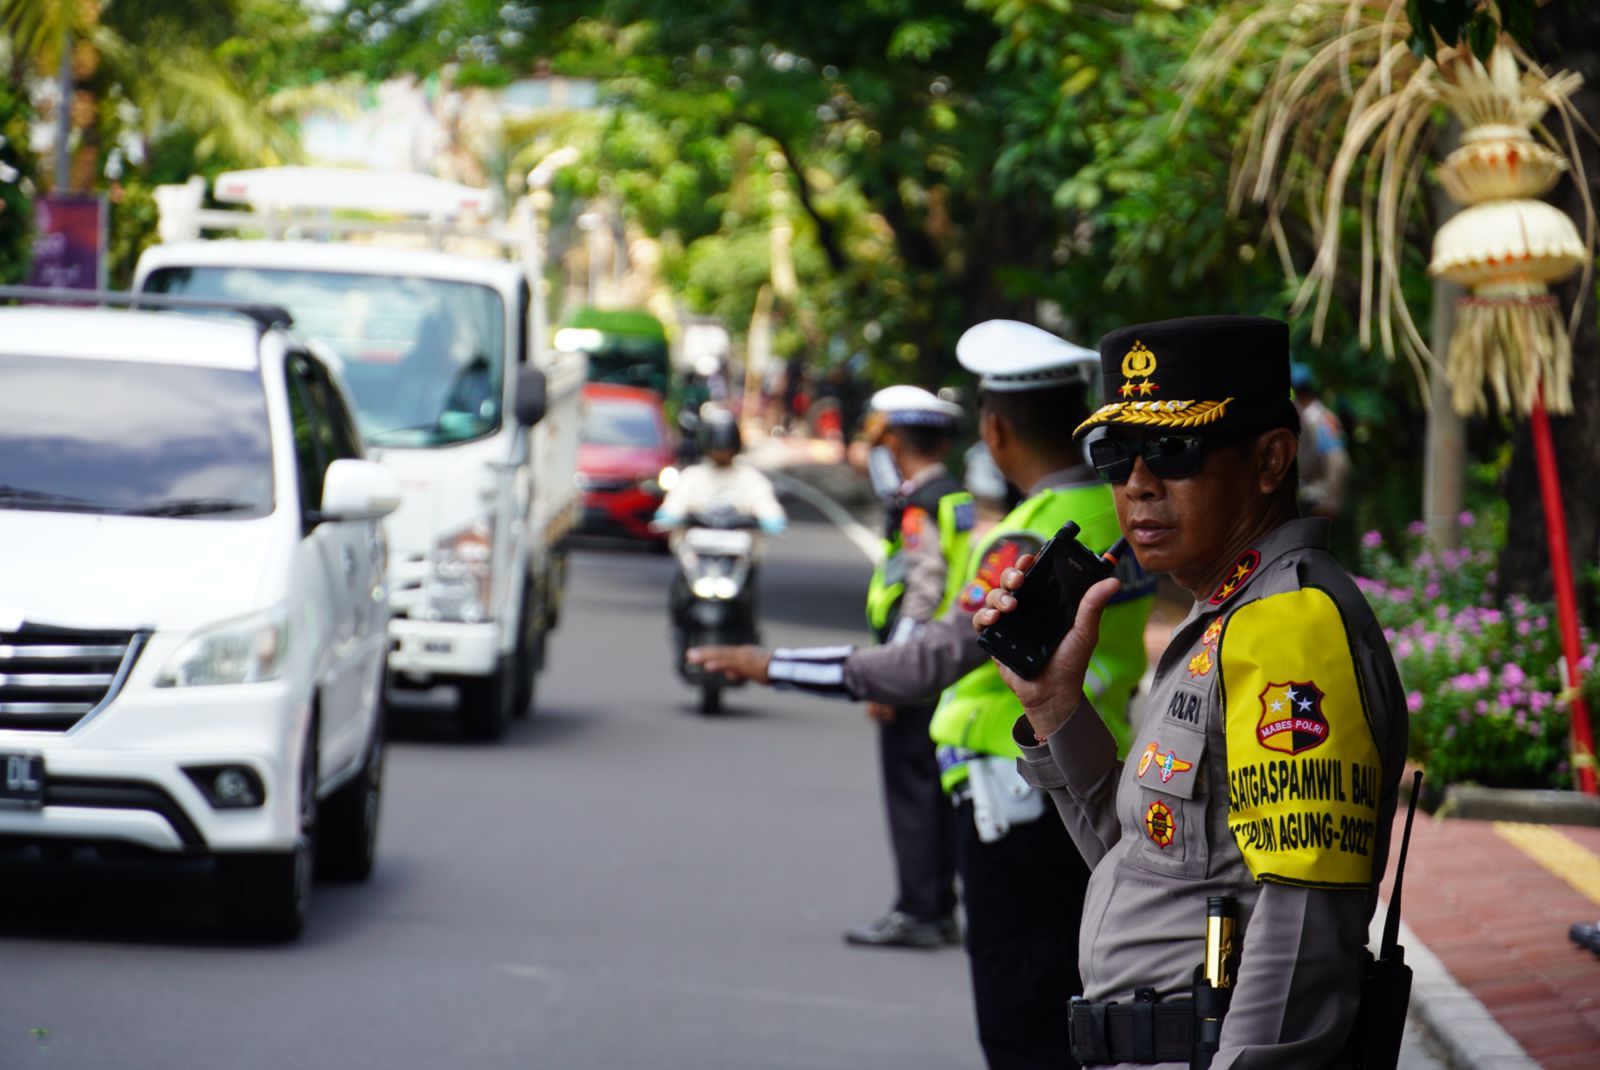 Kapolda Bali Pantau Pengamanan Pintu Masuk Area Tahura Mangrove